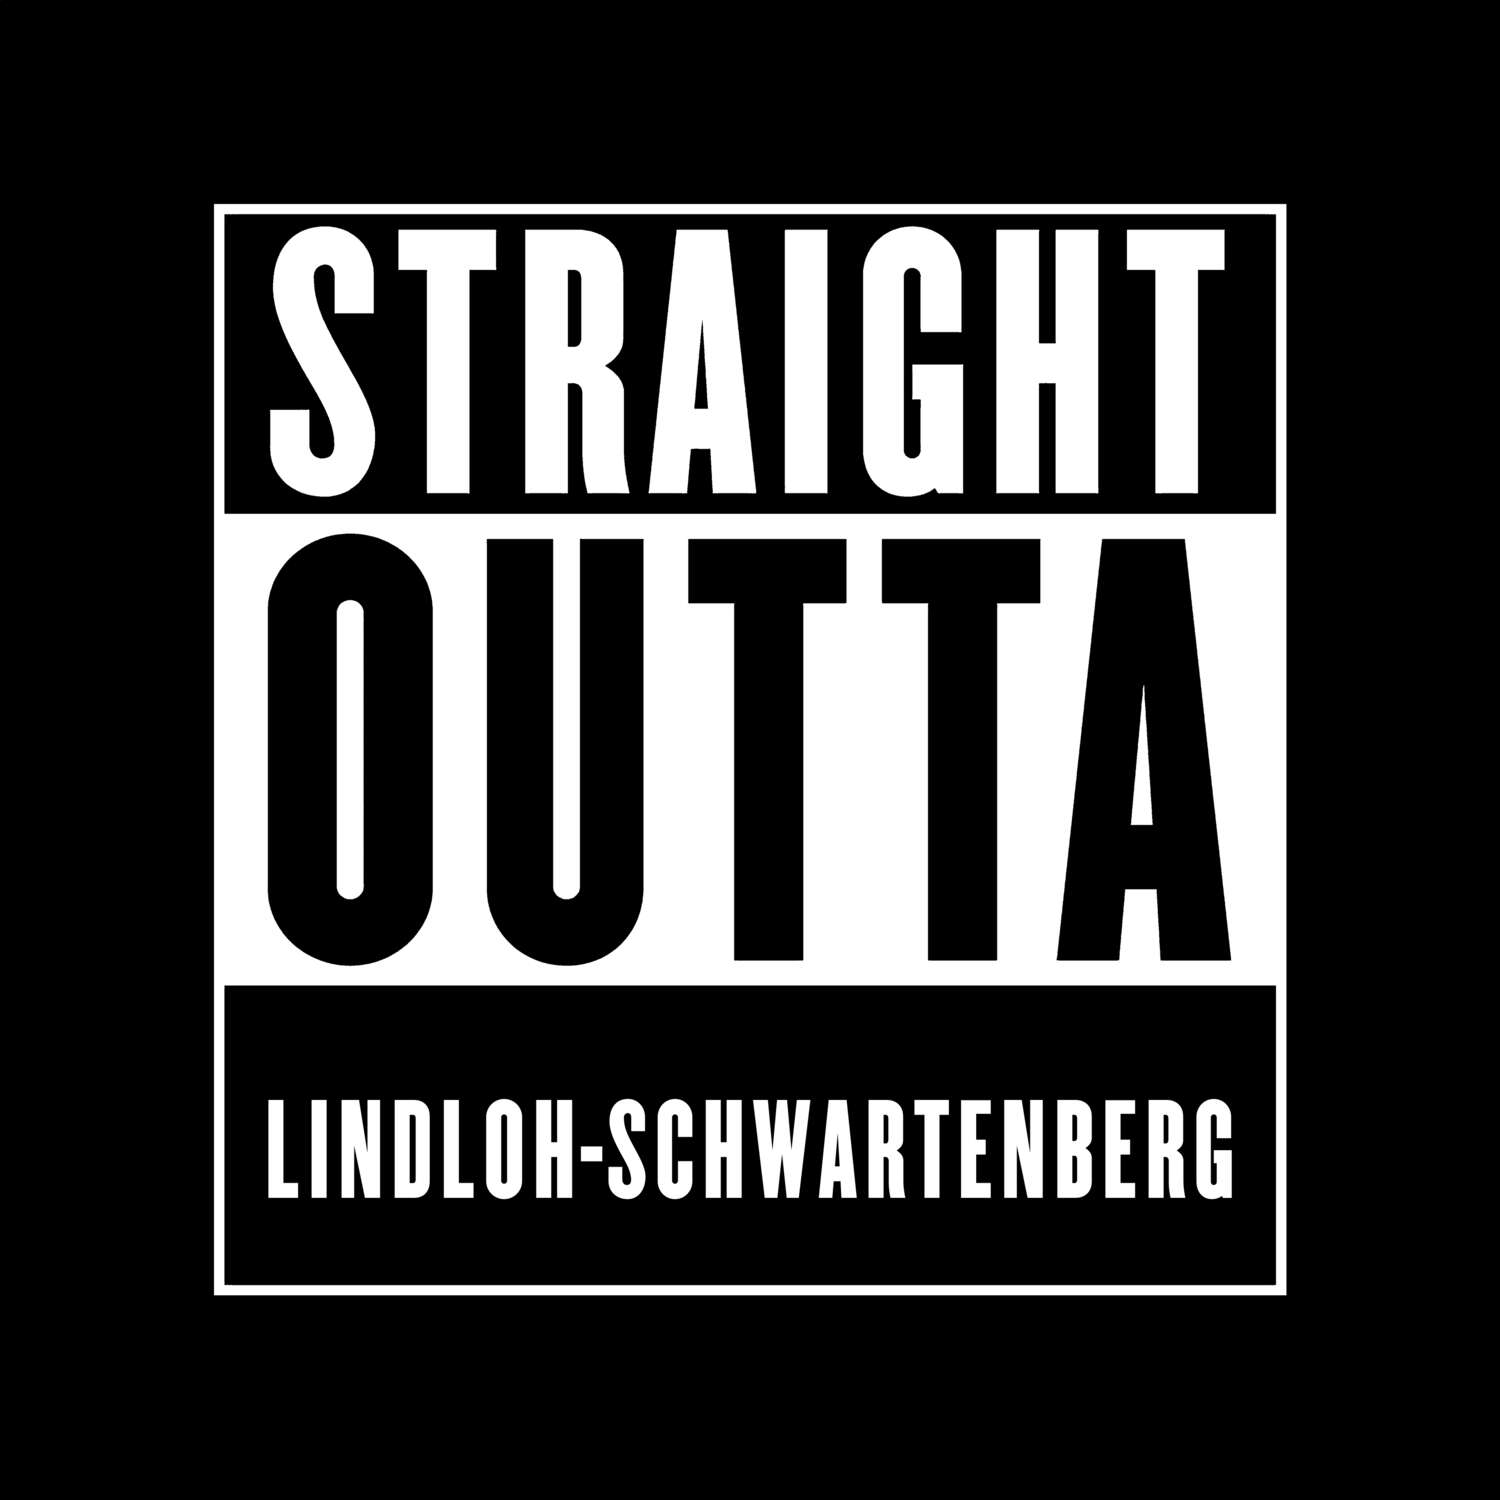 Lindloh-Schwartenberg T-Shirt »Straight Outta«